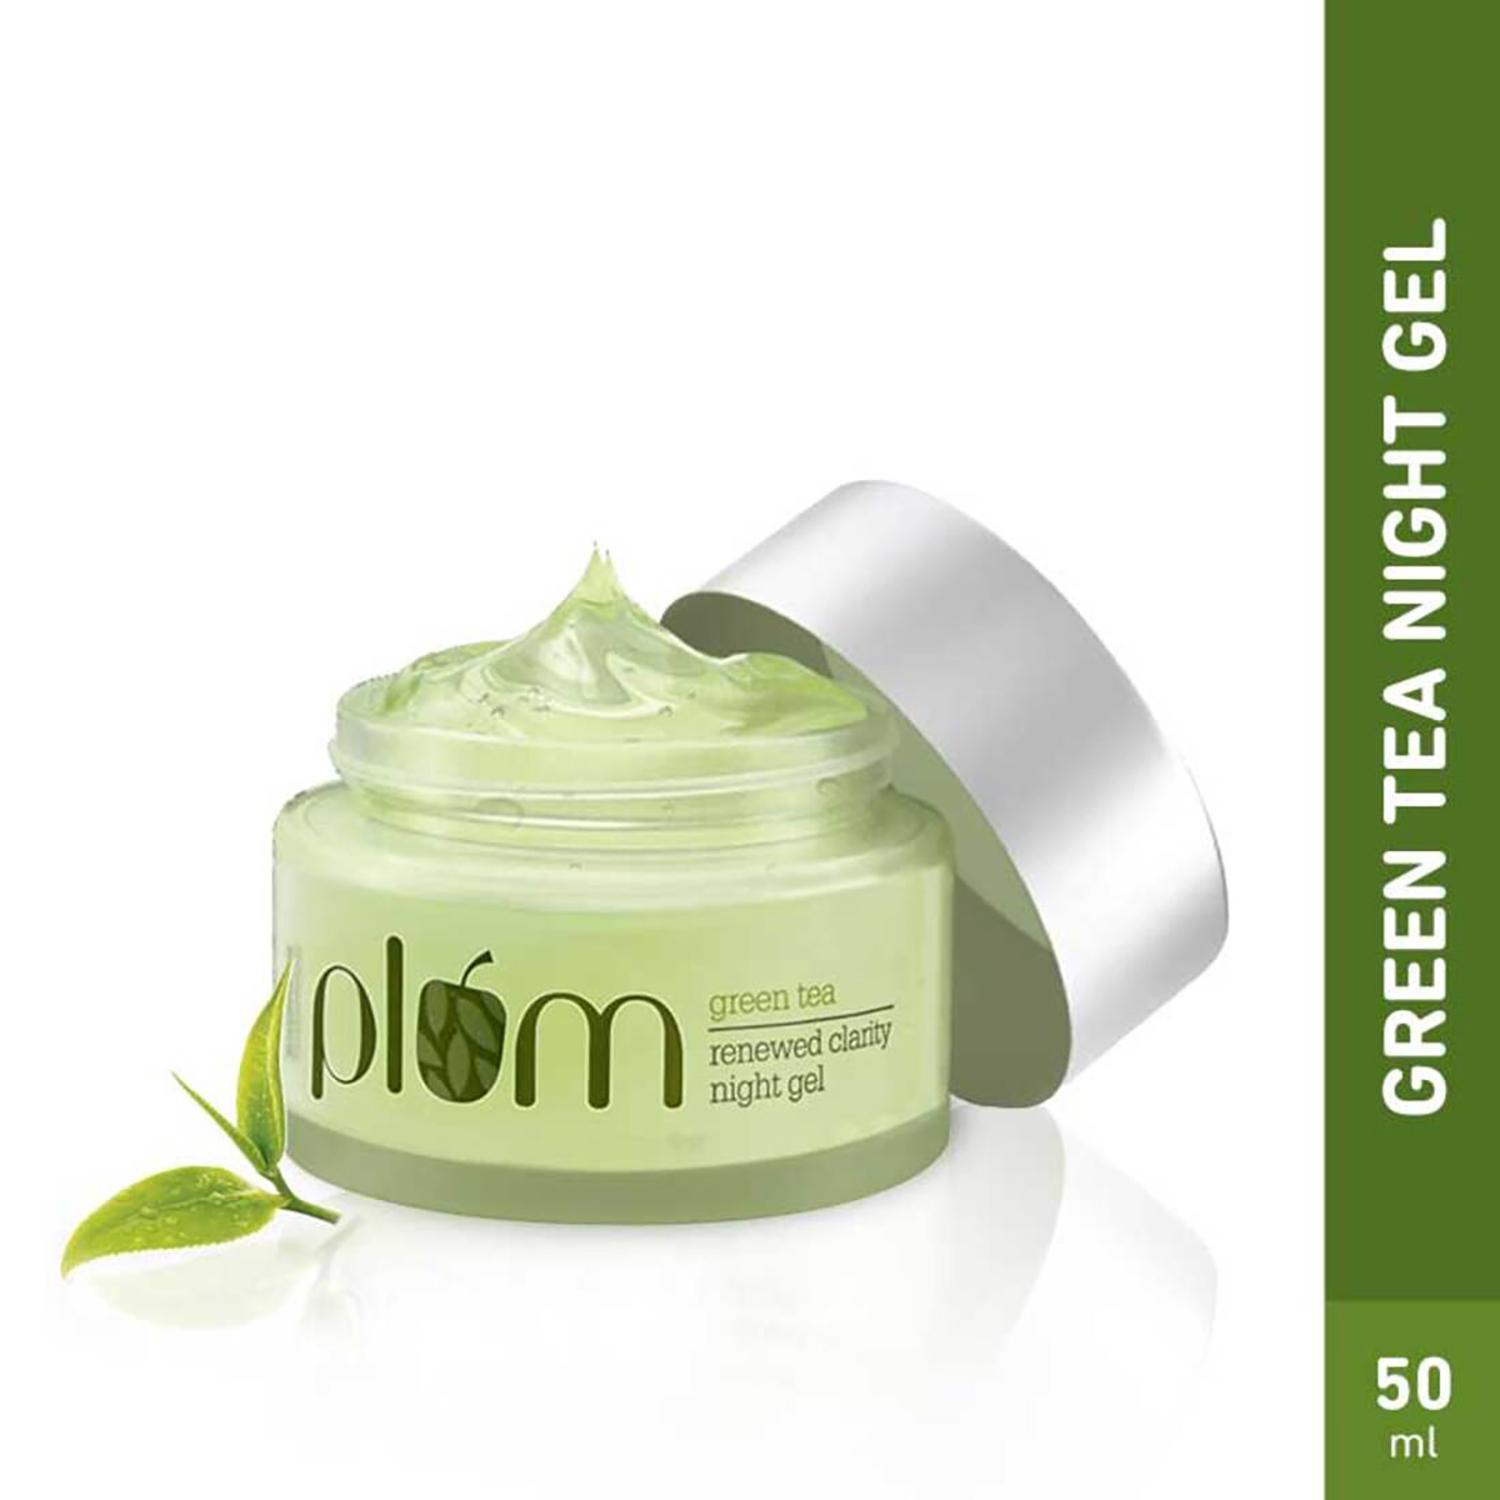 Plum | Plum Green Tea Renewing Night Gel, Glycolic Acid-Fights Acne For Clear, Oil-Free, Hydrated Skin(50g)